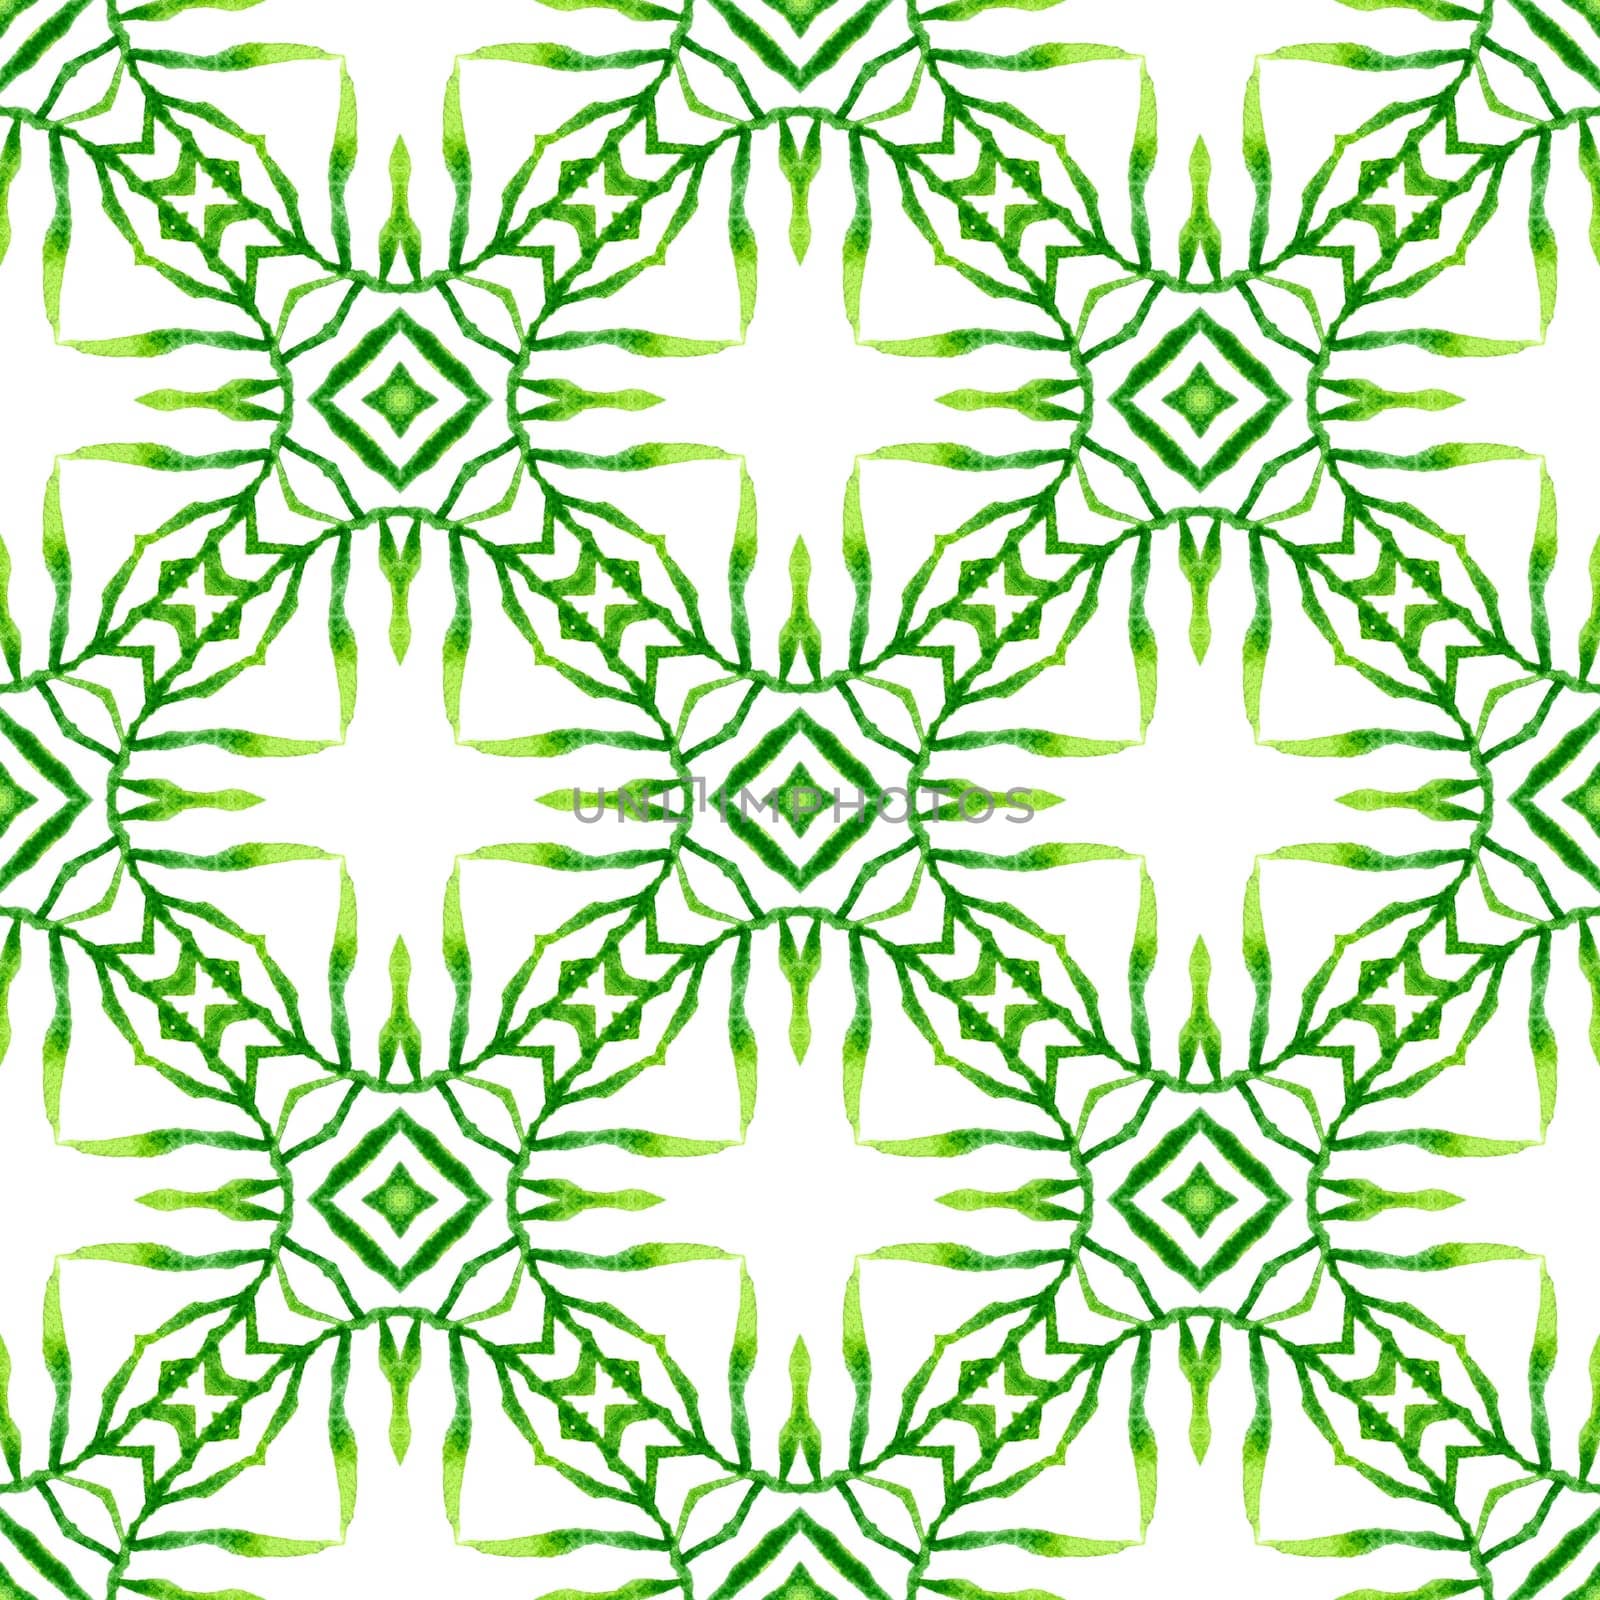 Ikat repeating swimwear design. Green mesmeric boho chic summer design. Textile ready cool print, swimwear fabric, wallpaper, wrapping. Watercolor ikat repeating tile border.